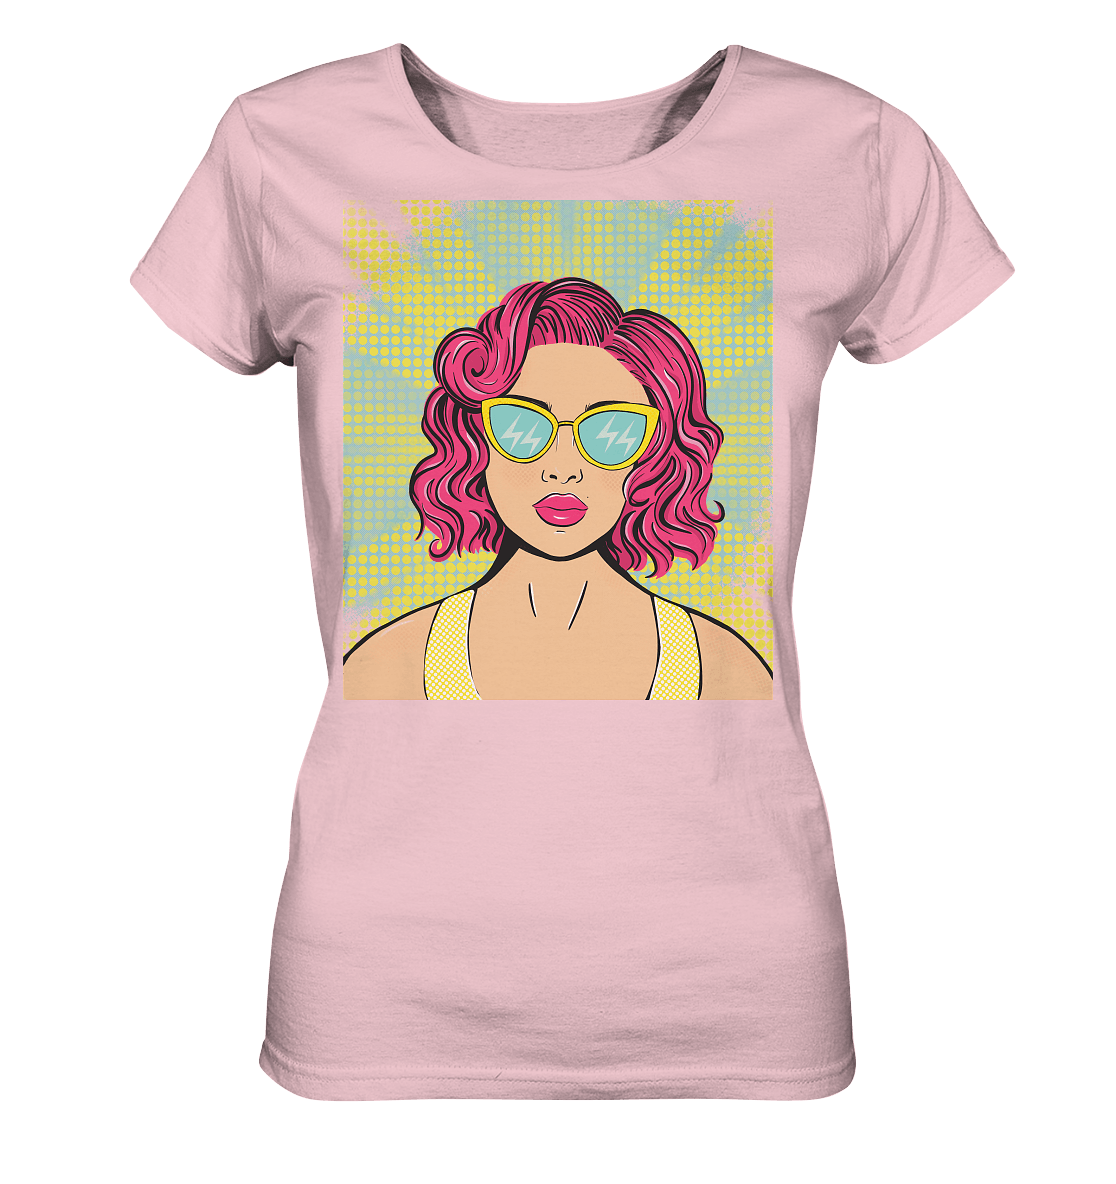 damen t-shirt mit pop art design in rosa von bloominic Comic Style Pop Art Retro Rosa